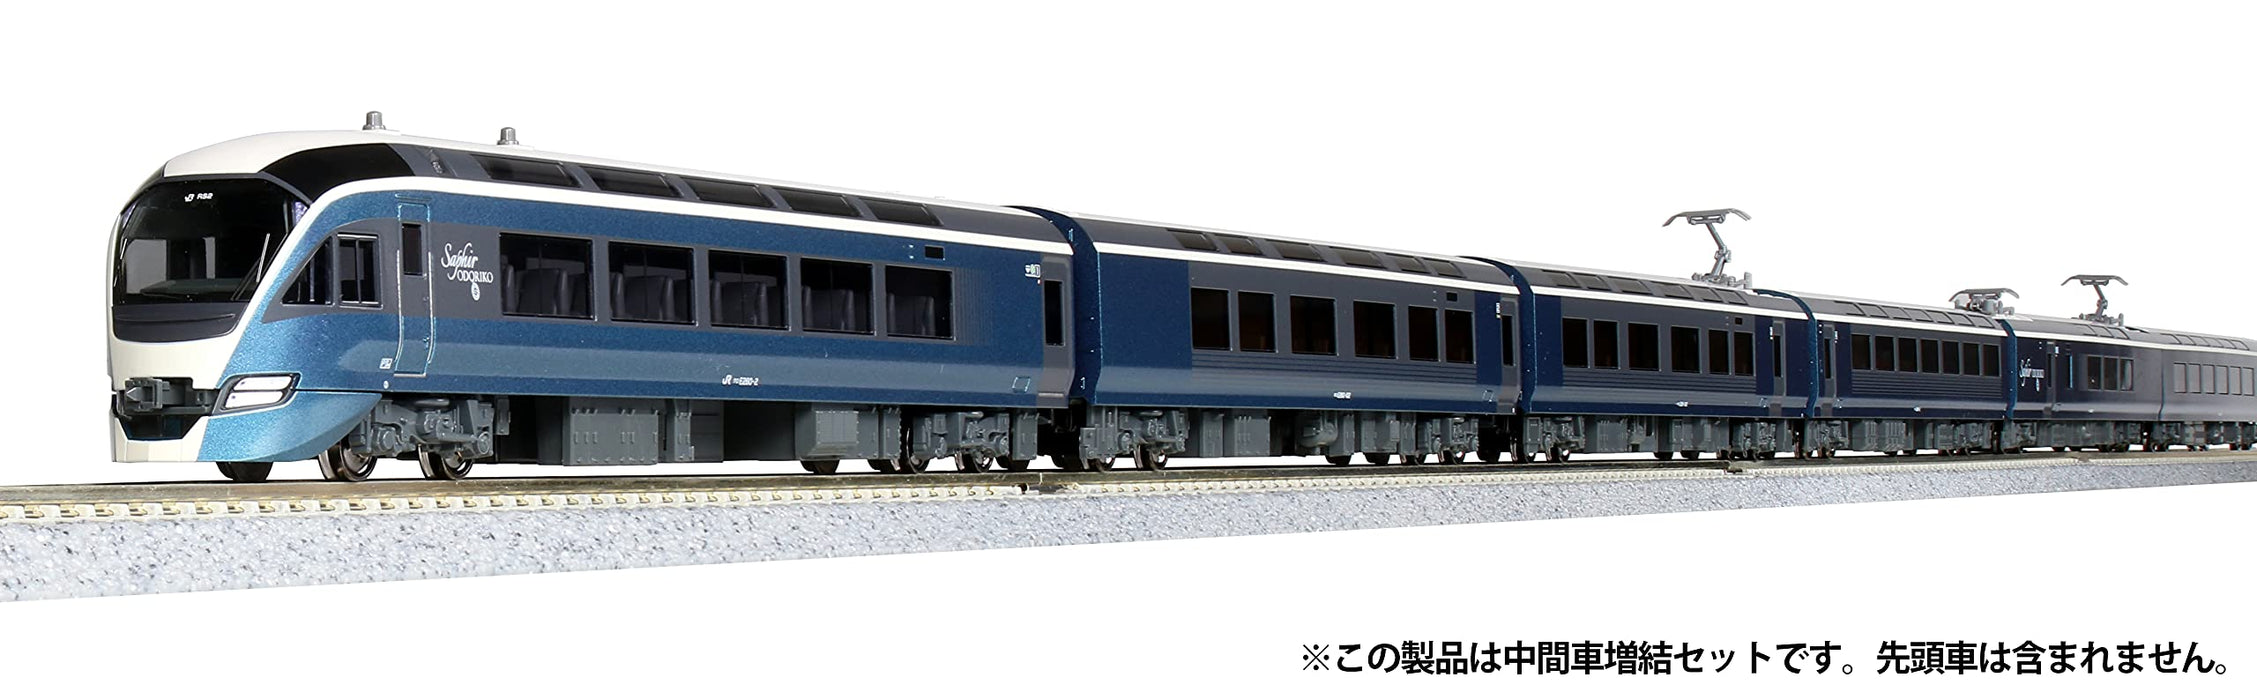 Kato N Gauge E261 Saphir Odoriko Add Set 10-1662 Model Train